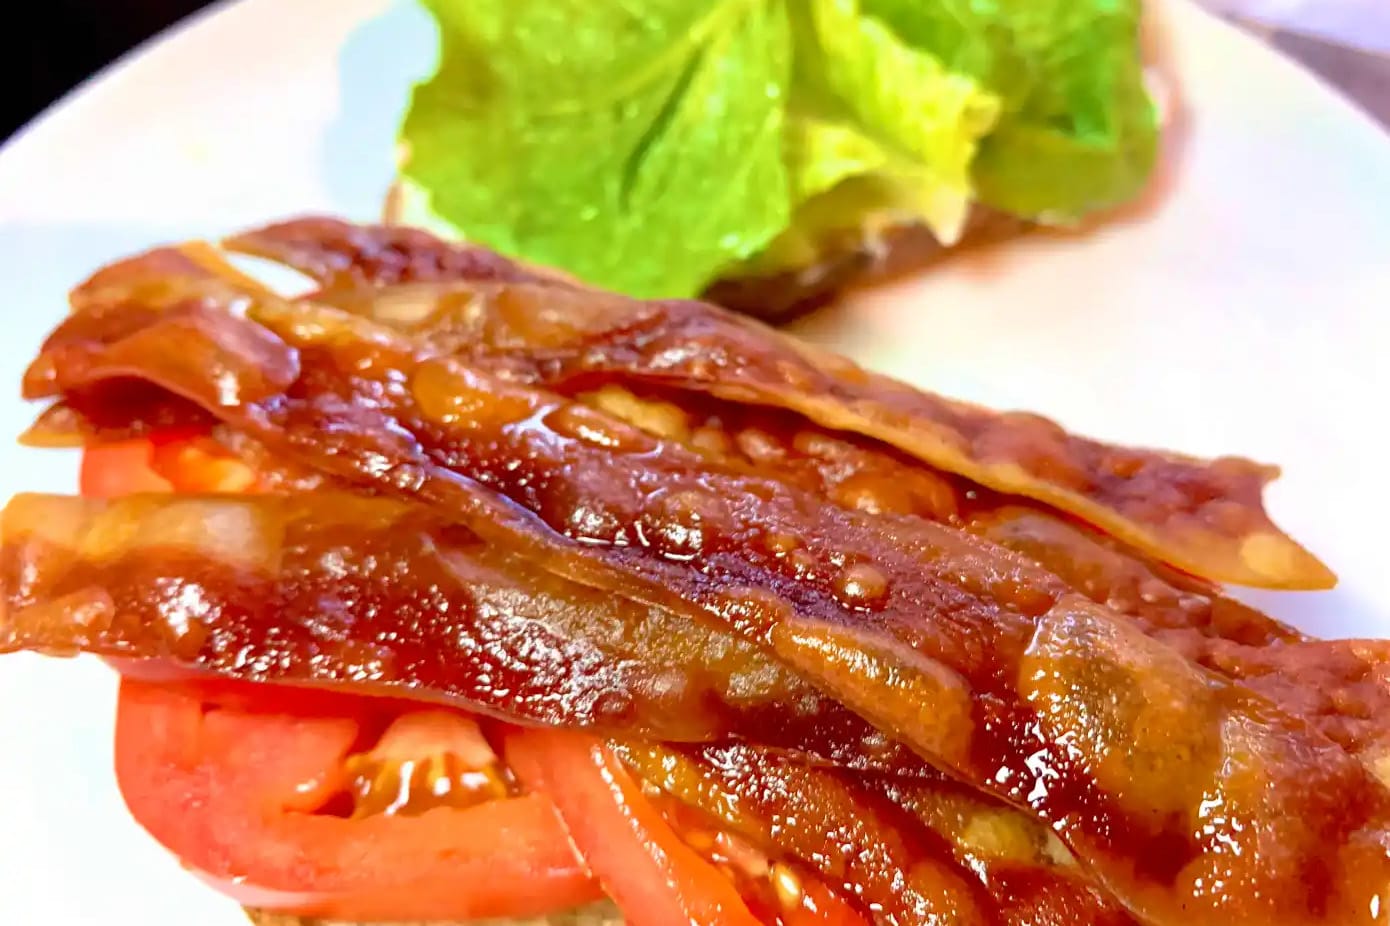 Umaro's bacon made from seaweed